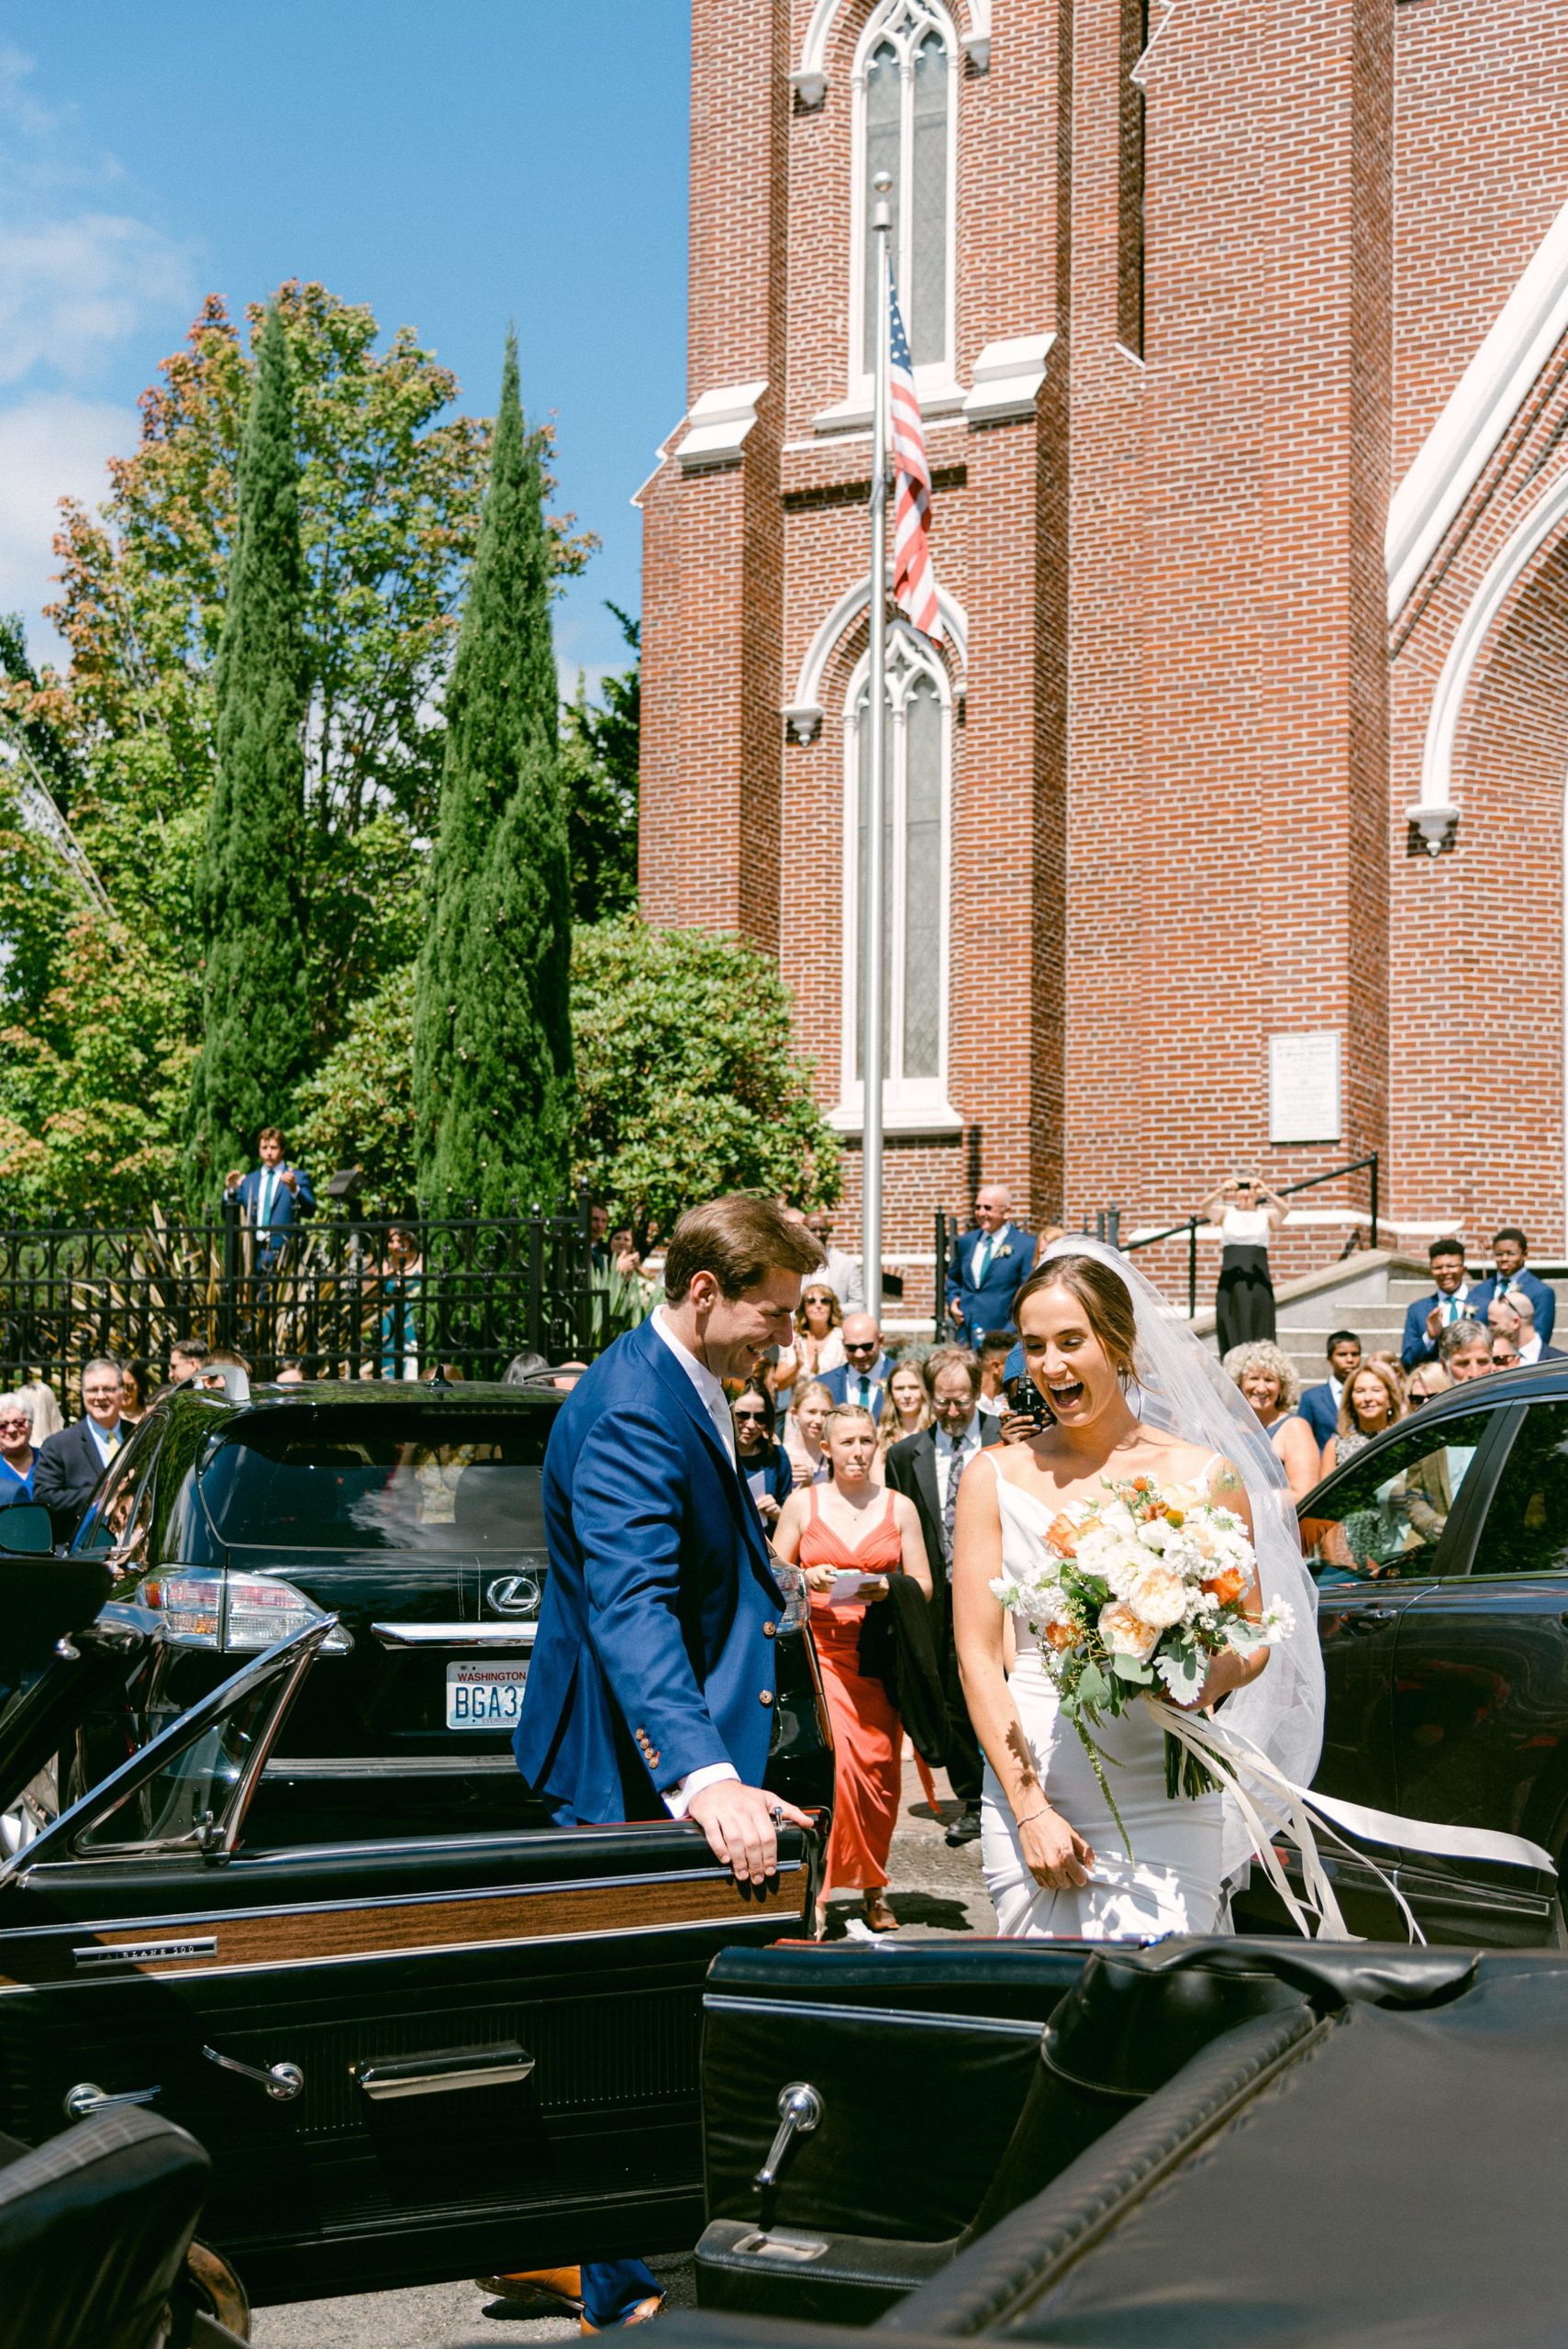 Portland Wedding Photographer // Catholic Wedding // Bride and Groom Leaving Ceremony, Vintage Car